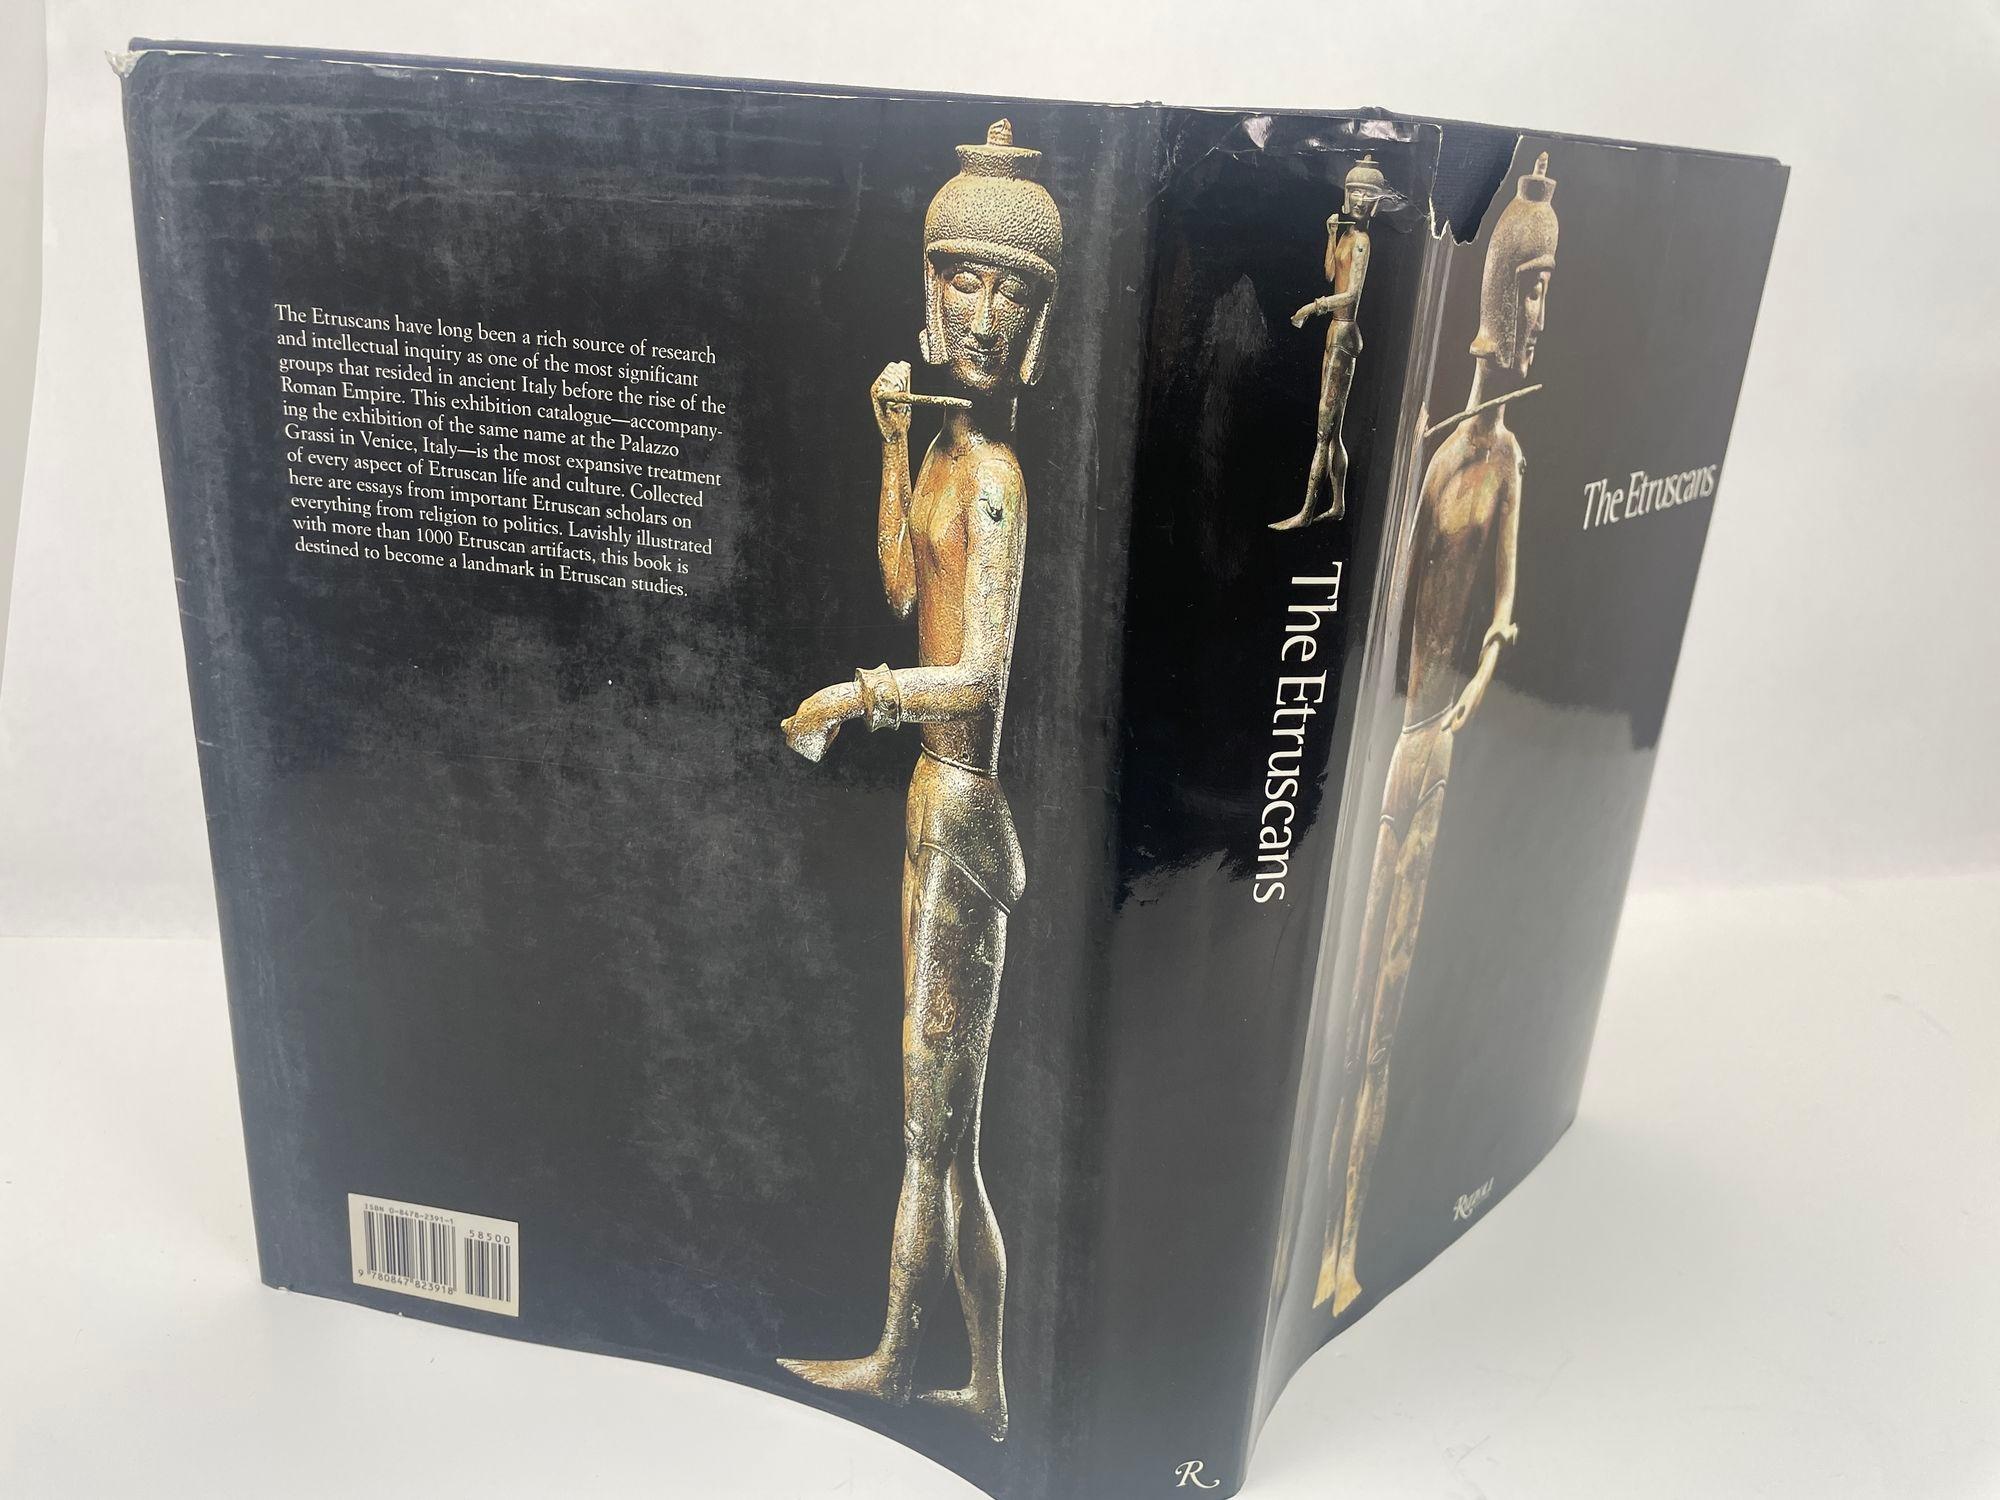 The Etruscans Hardcover Book by Mario Torelli 1st Ed. 2001 Rizzoli Bon état - En vente à North Hollywood, CA